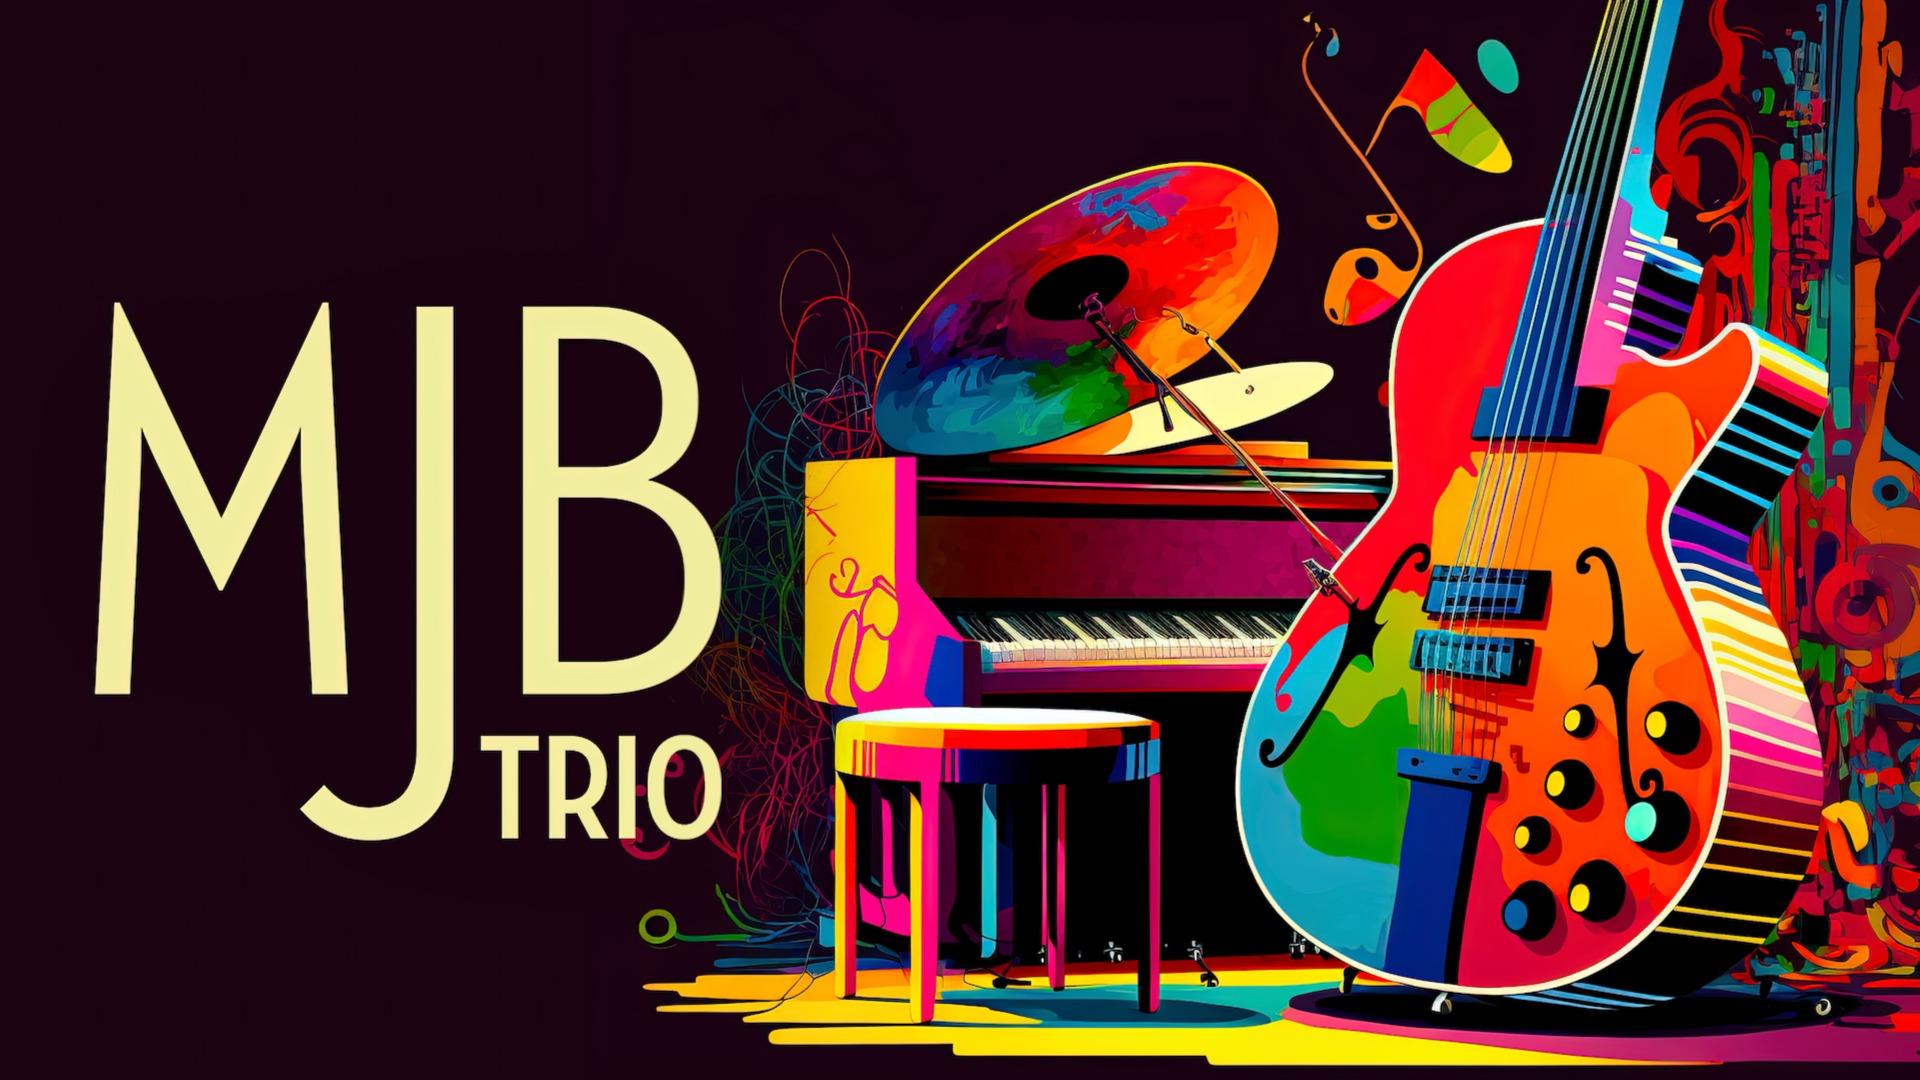 MJB Trio